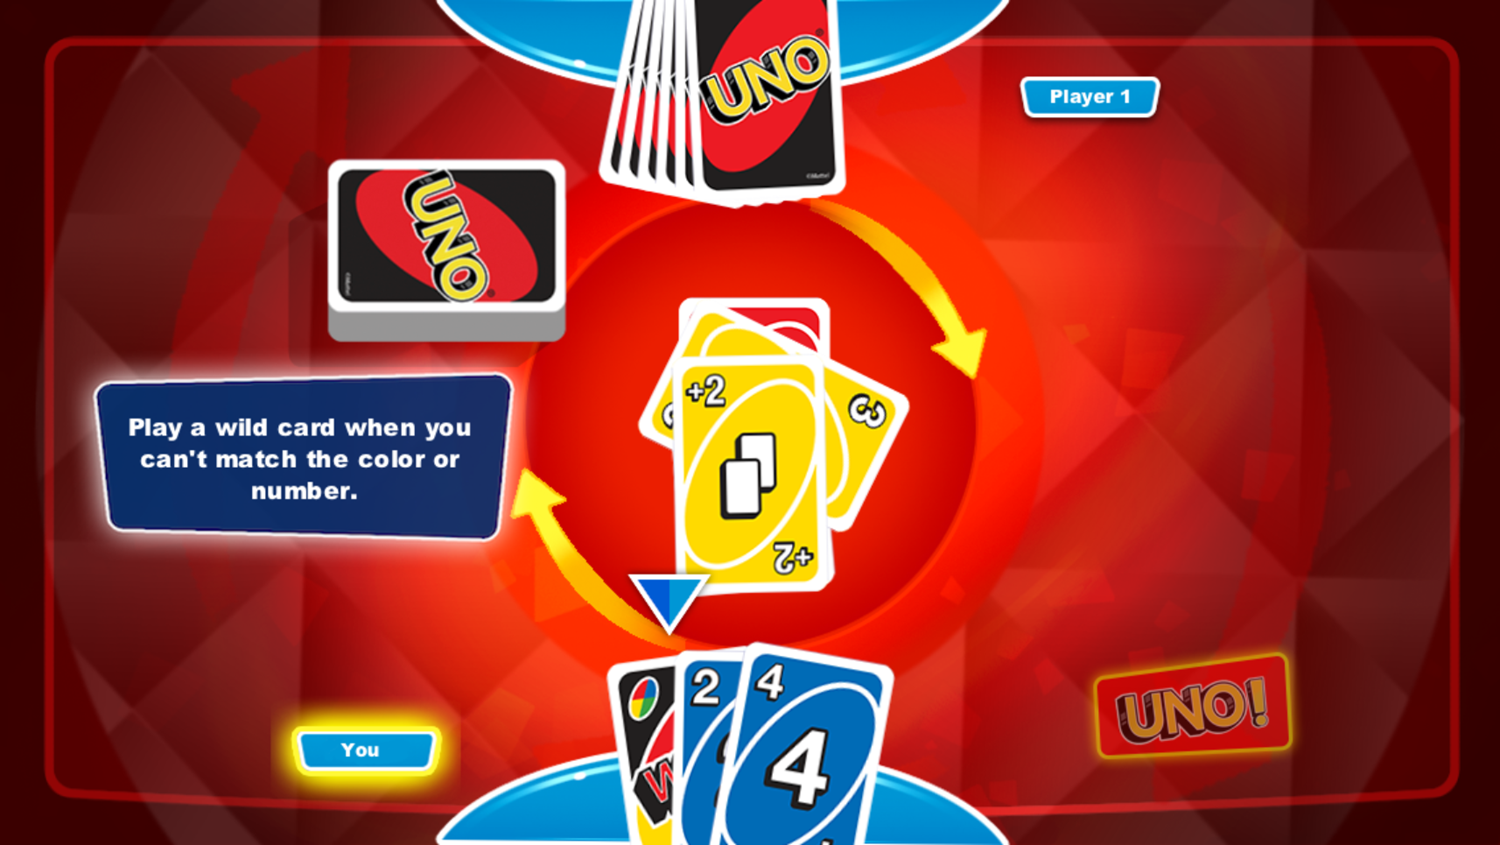 Uno Game Play Wild Card Screenshot.